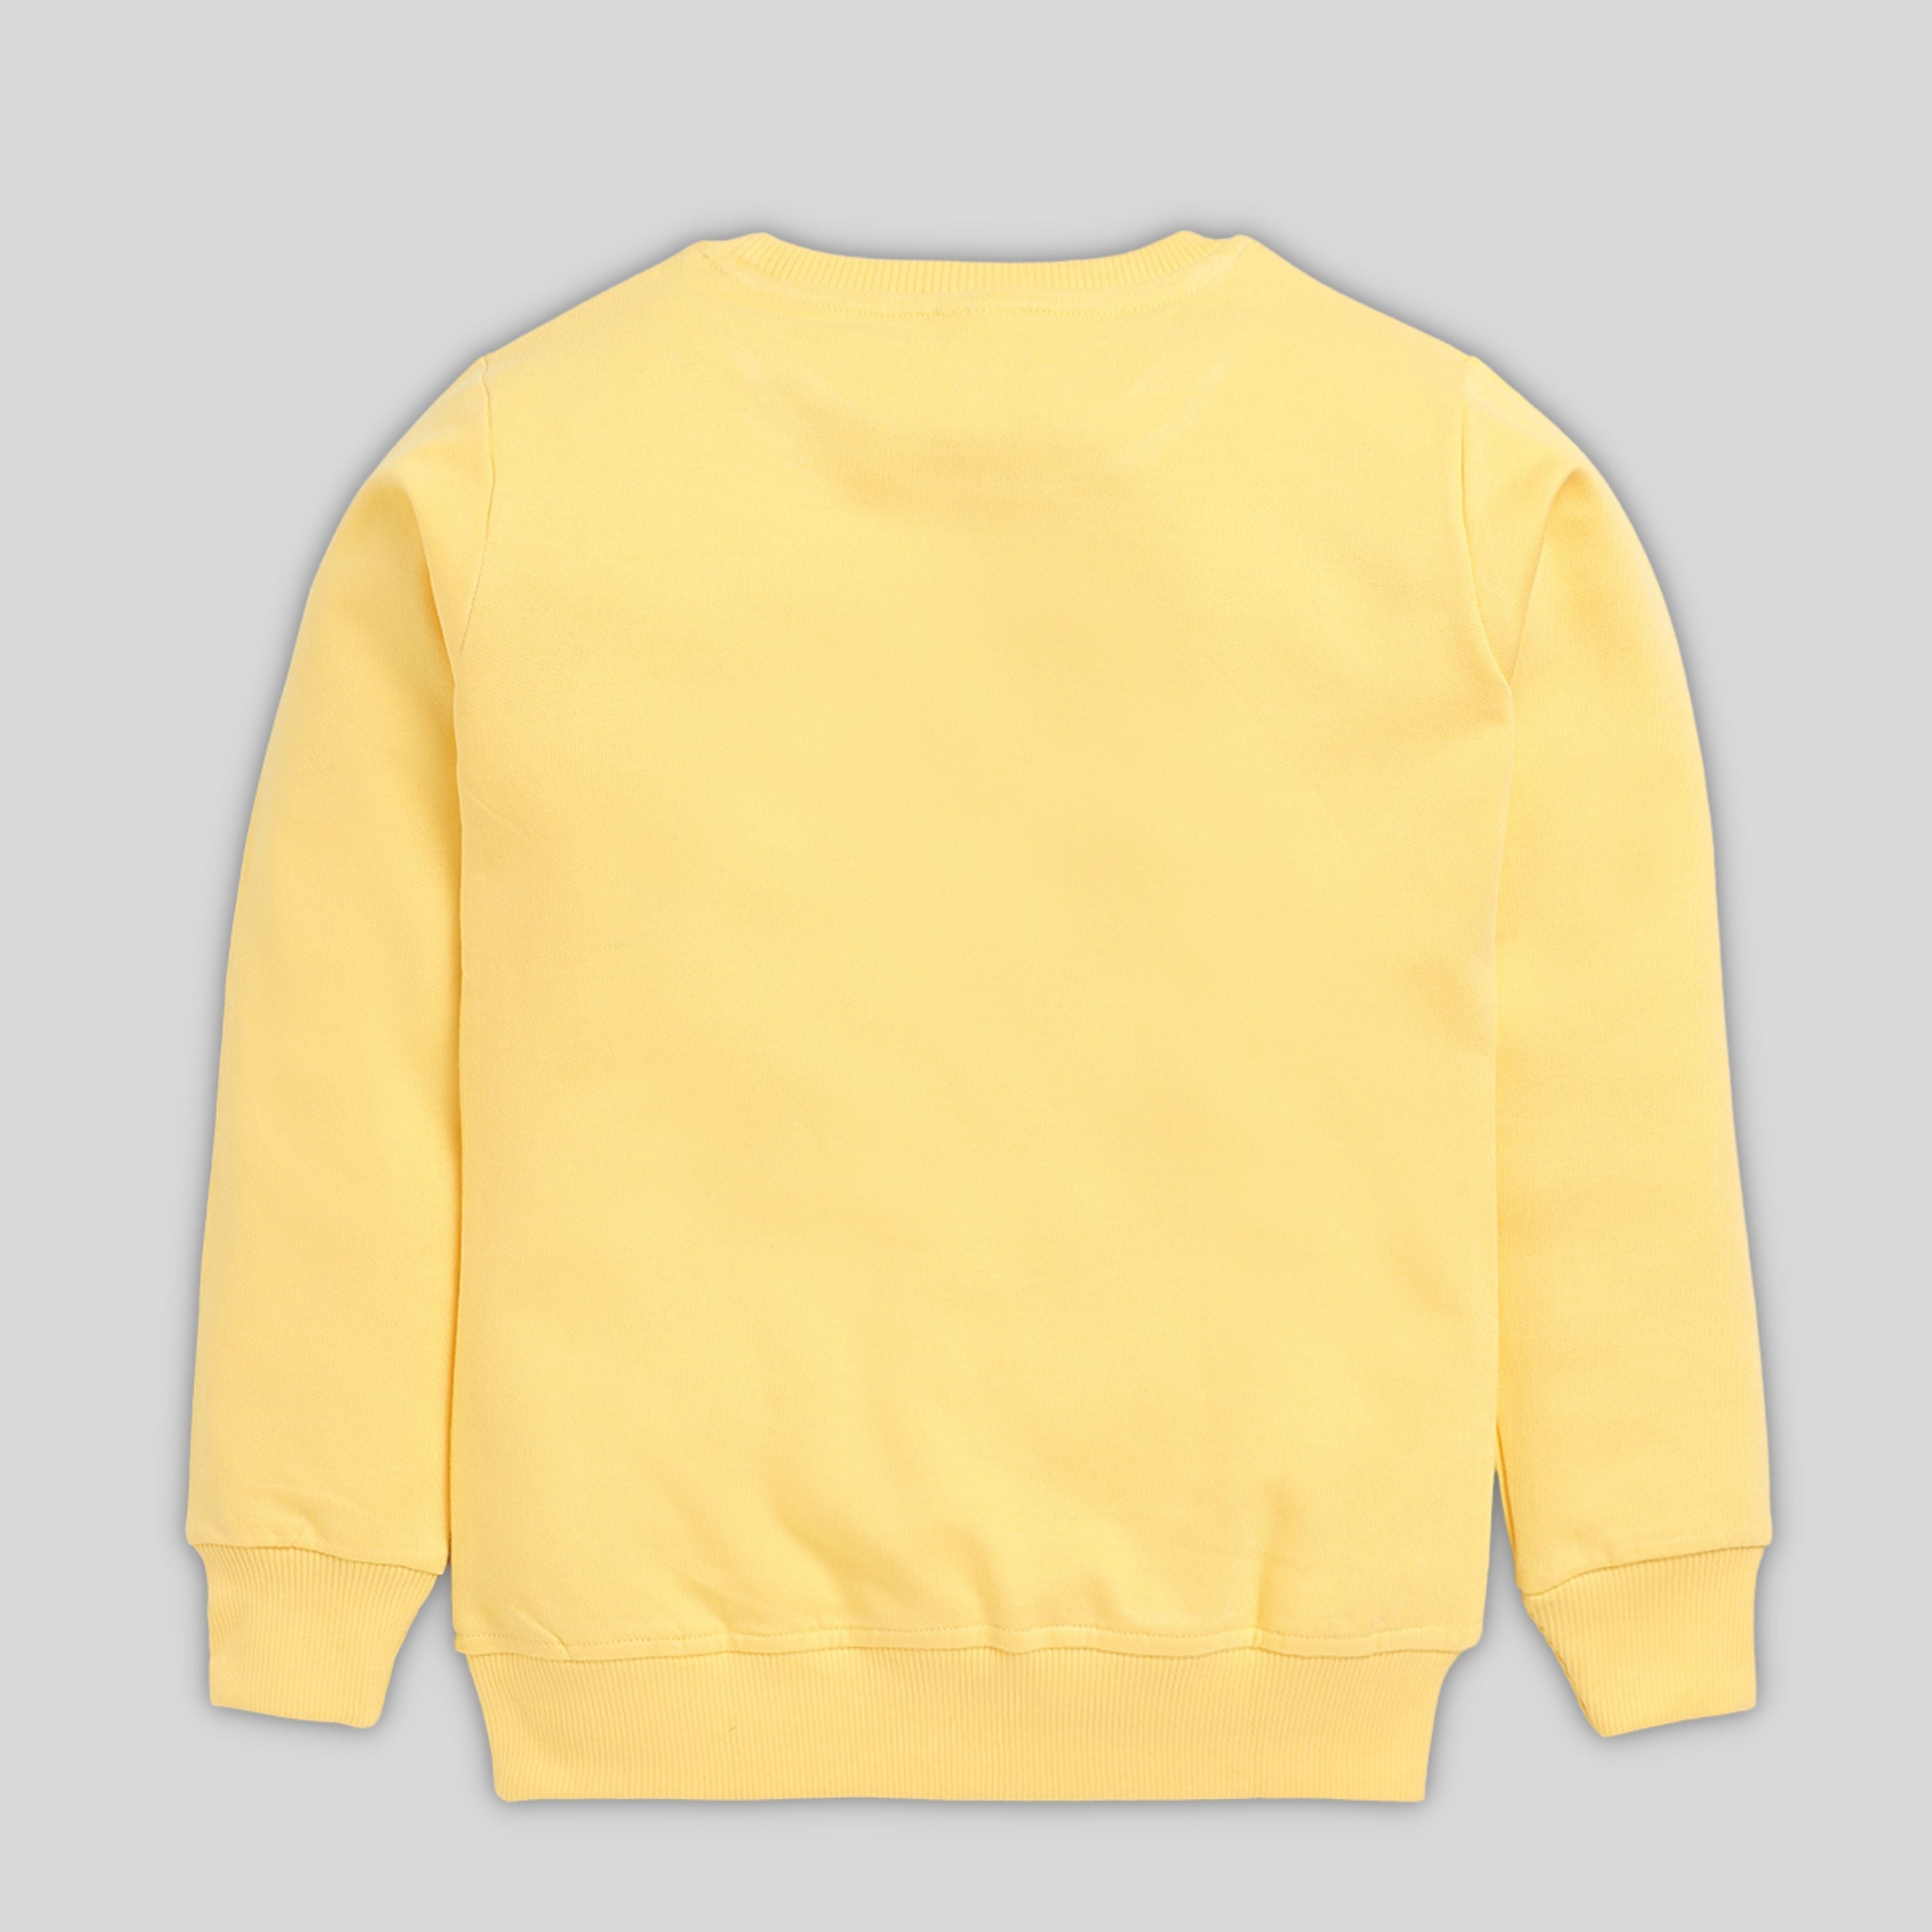 Printed Sweatshirt For Girl- Gold